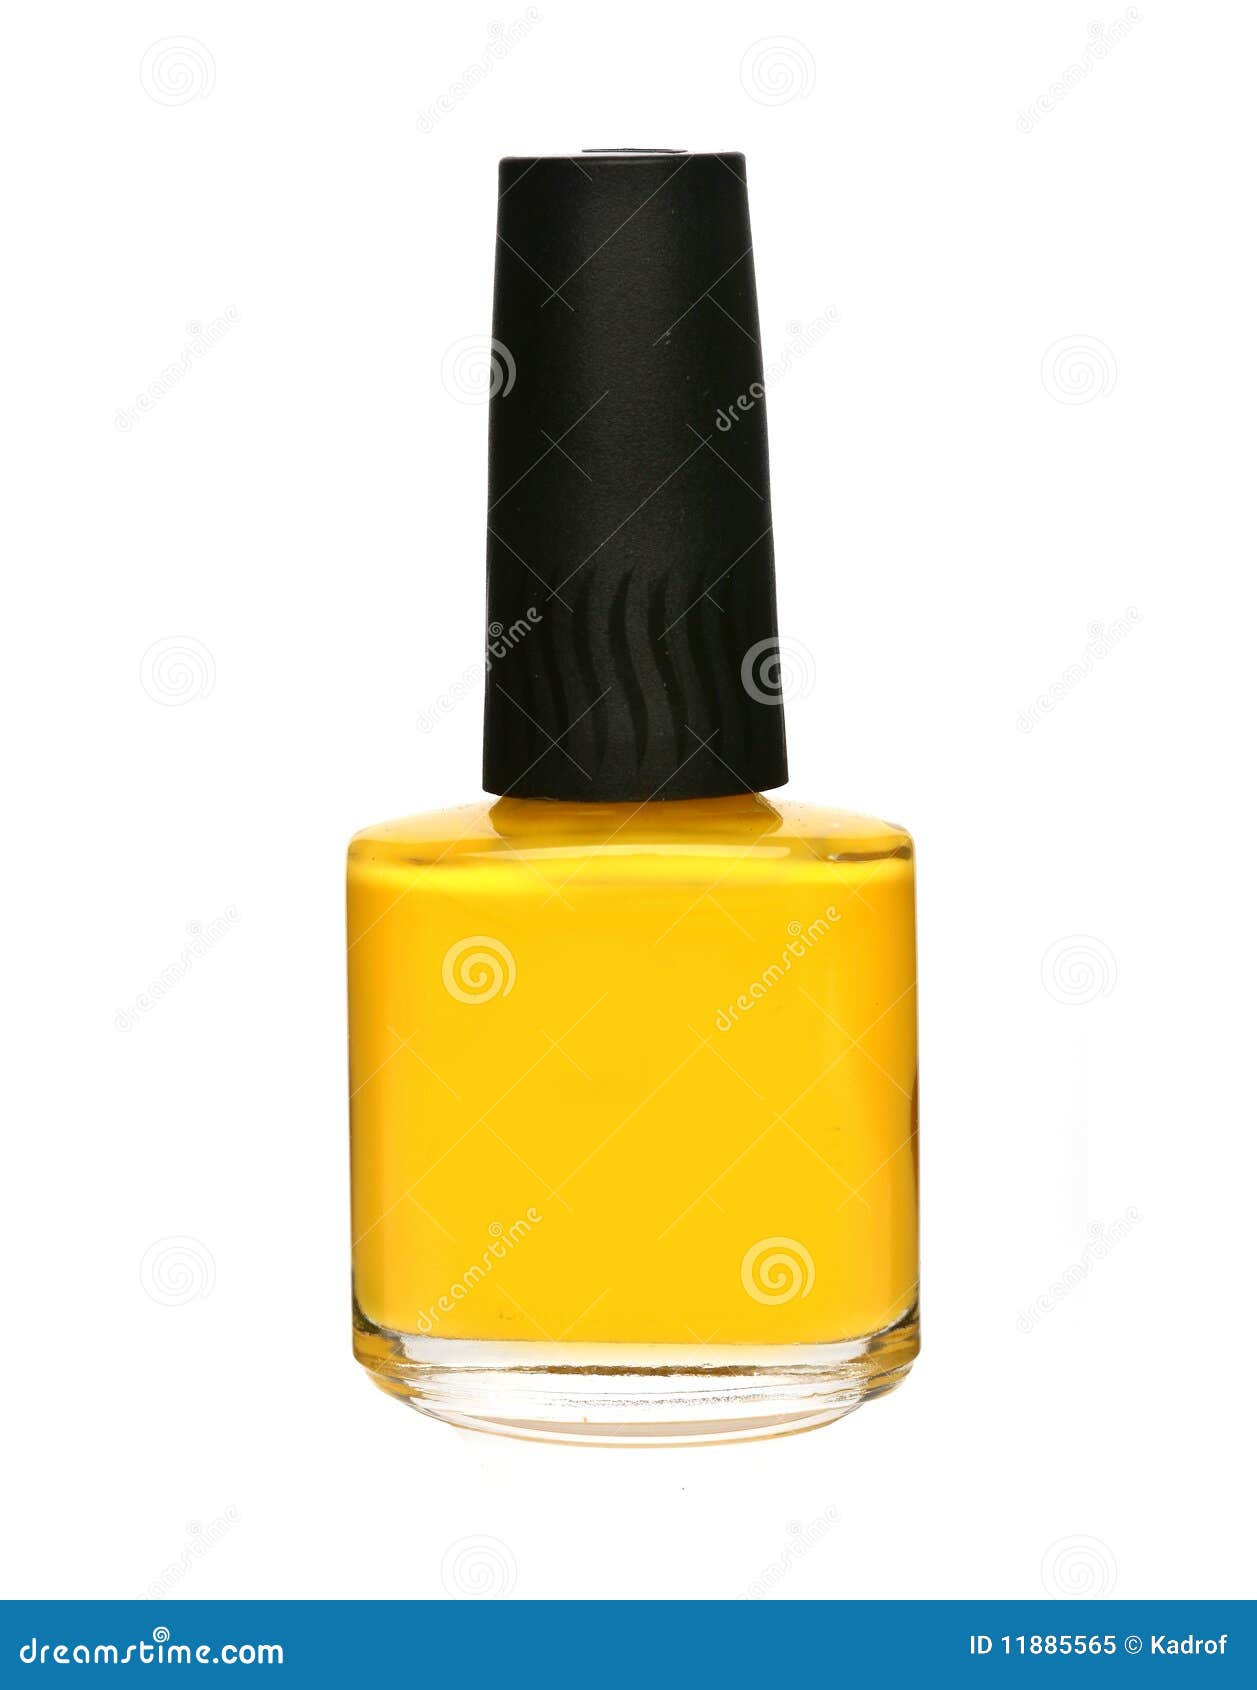 Download Yellow Nail Polish Bottle Stock Image Image Of Isolated 11885565 Yellowimages Mockups